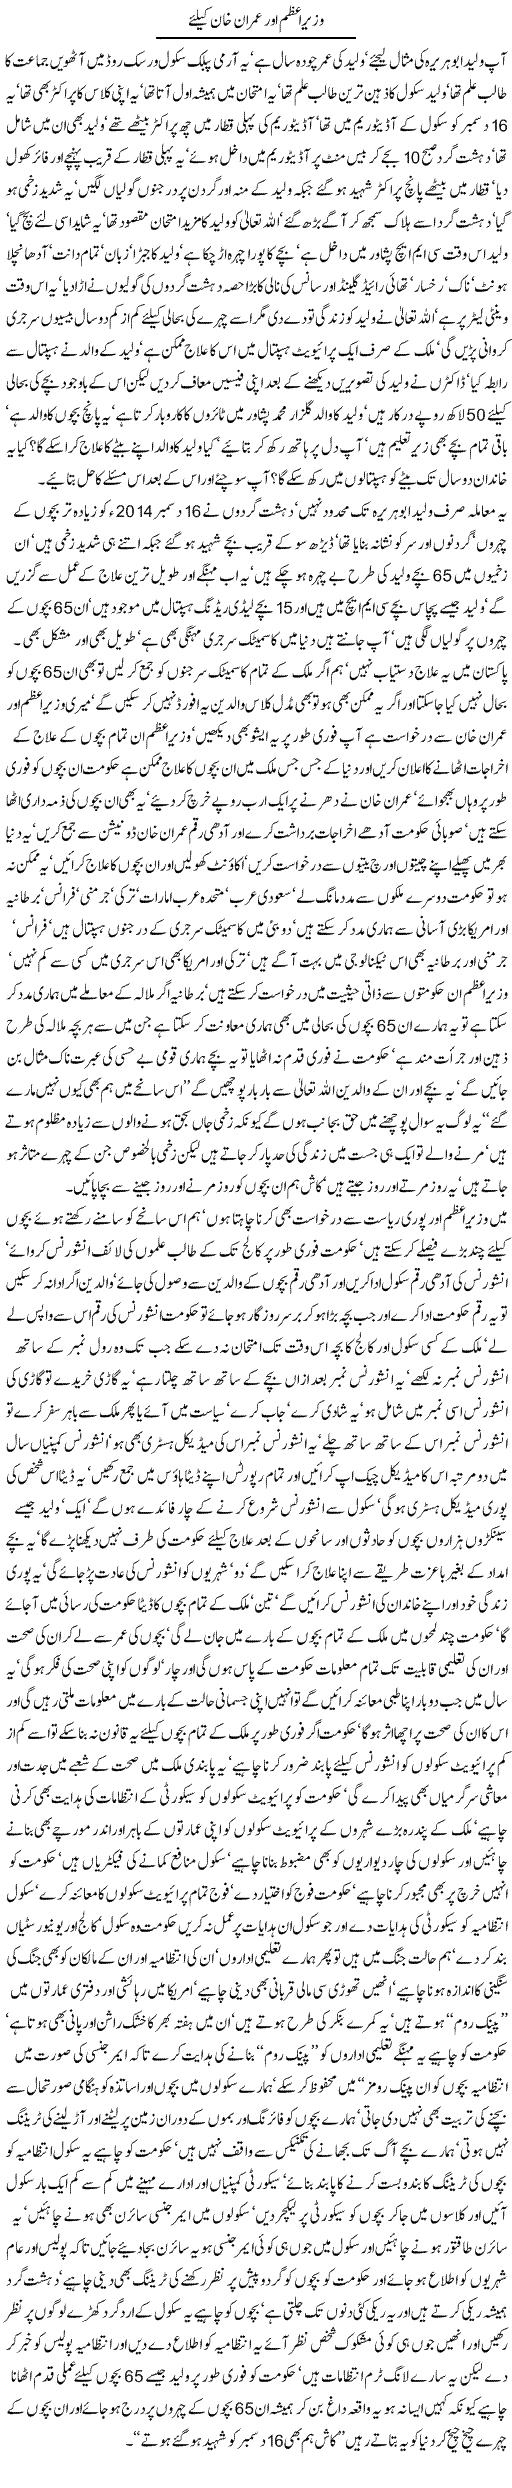 Wazir e Azam aur Imran Khan k Liye by Javed Chaudhry